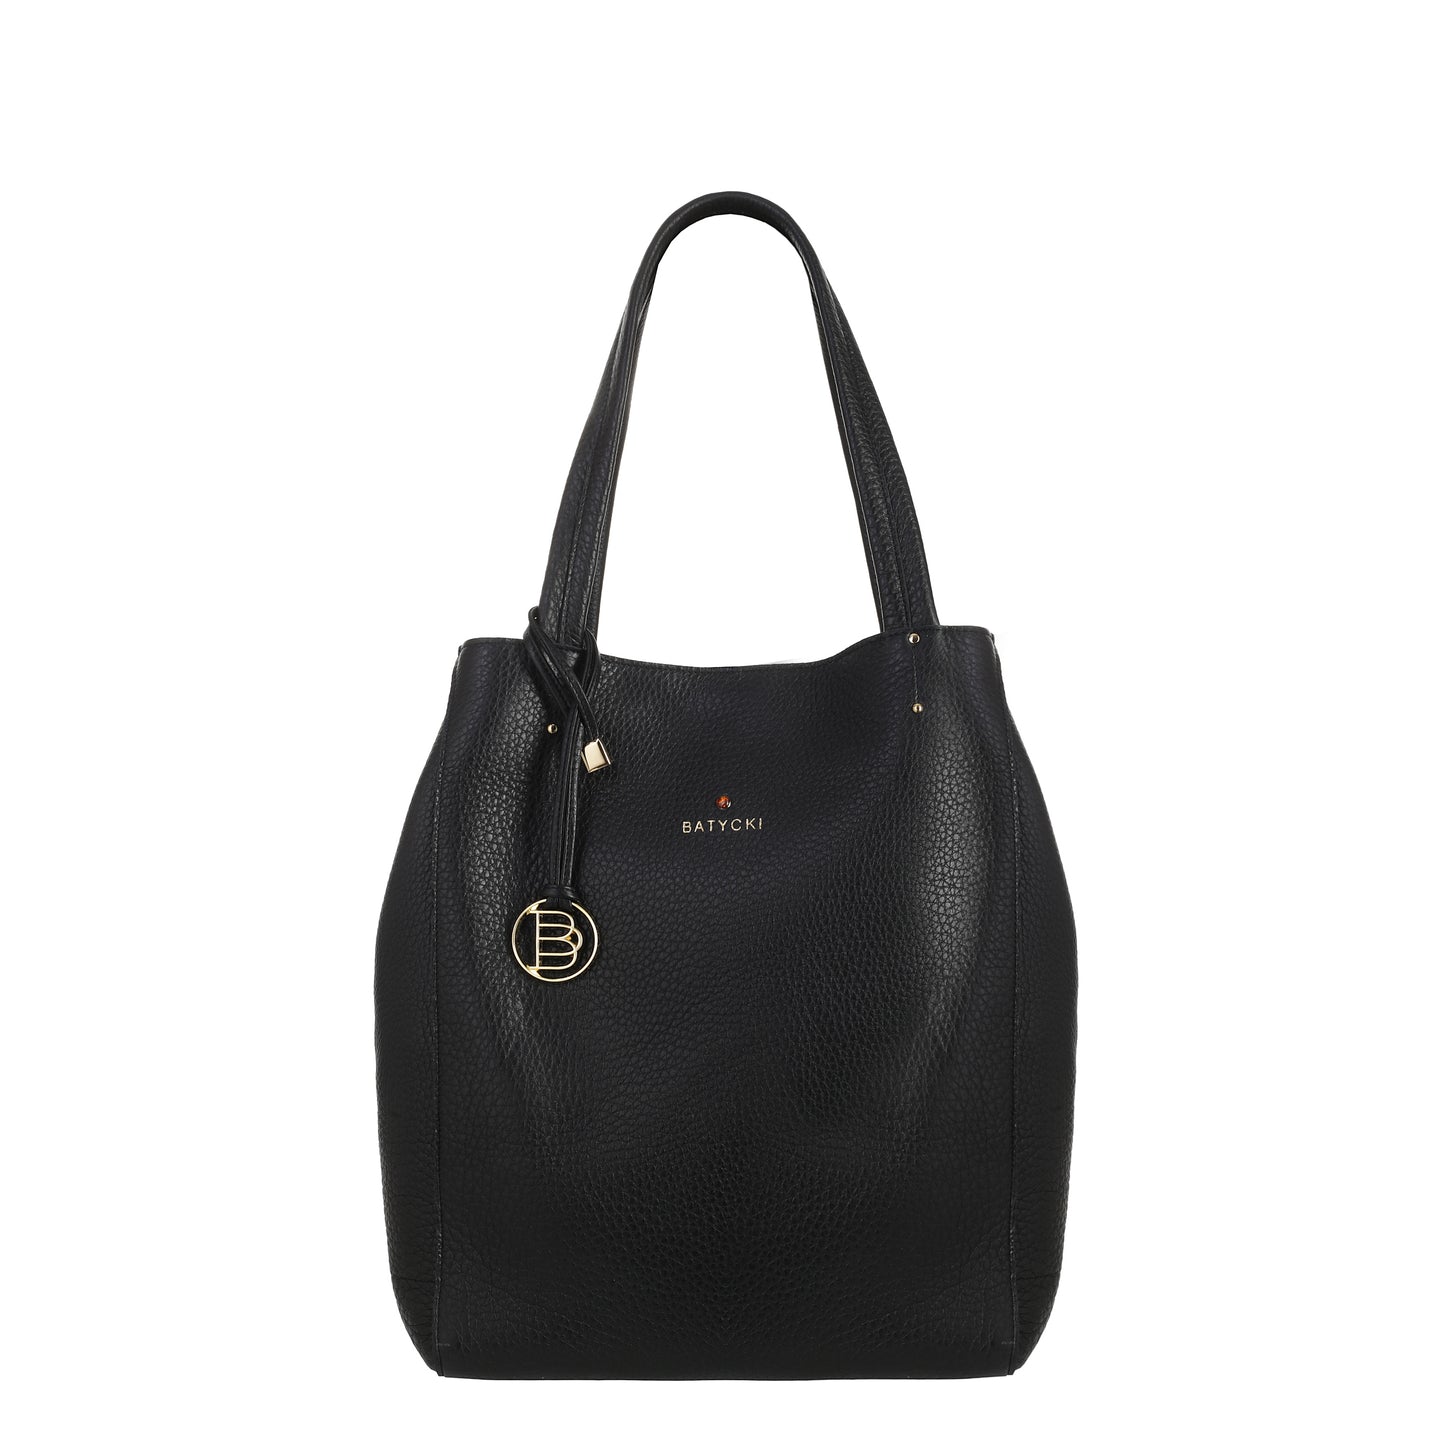 BAKU women's leather handbag floter black